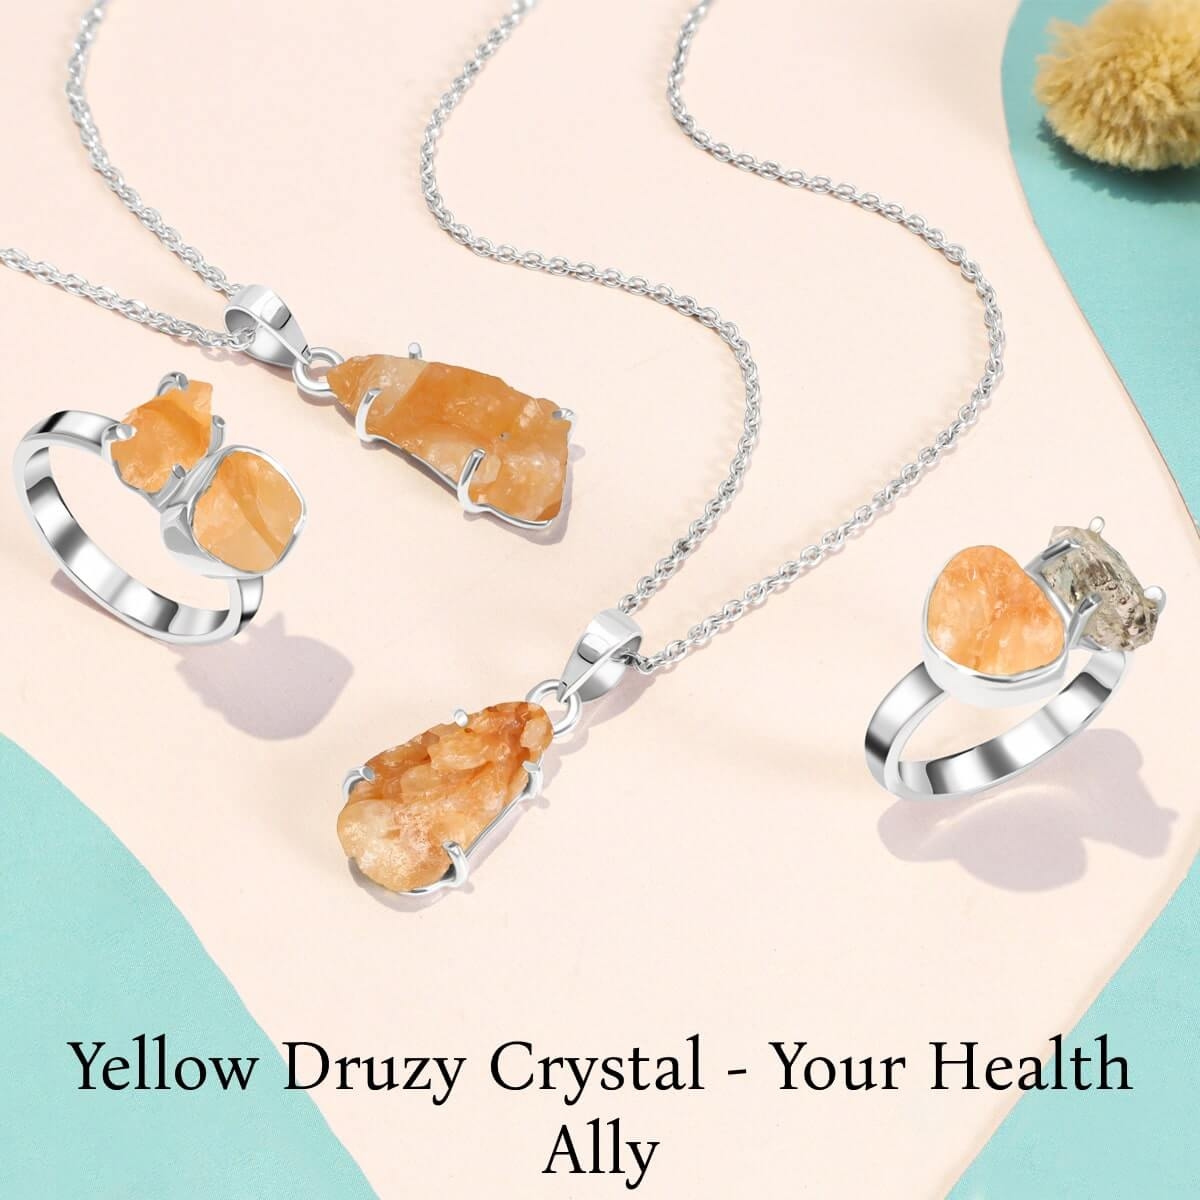 Healing Properties of Yellow Druzy Crystal